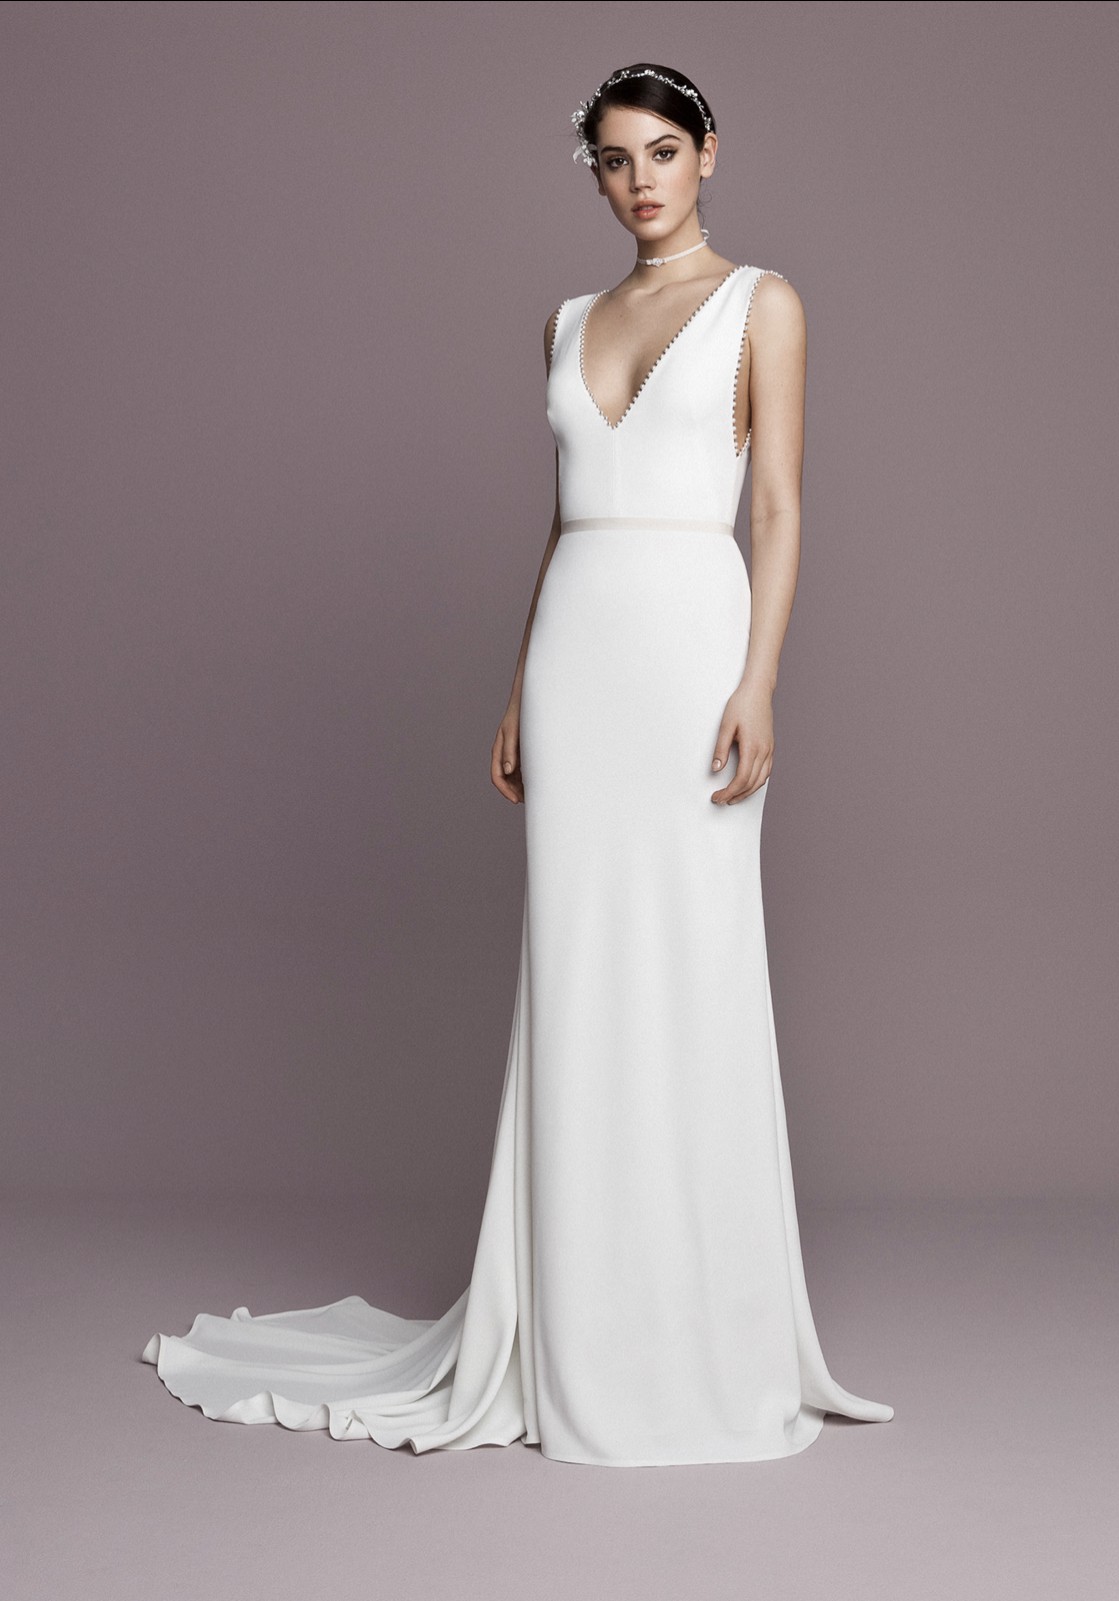 Daalarna Style 585 New Wedding Dress Save 35% - Stillwhite